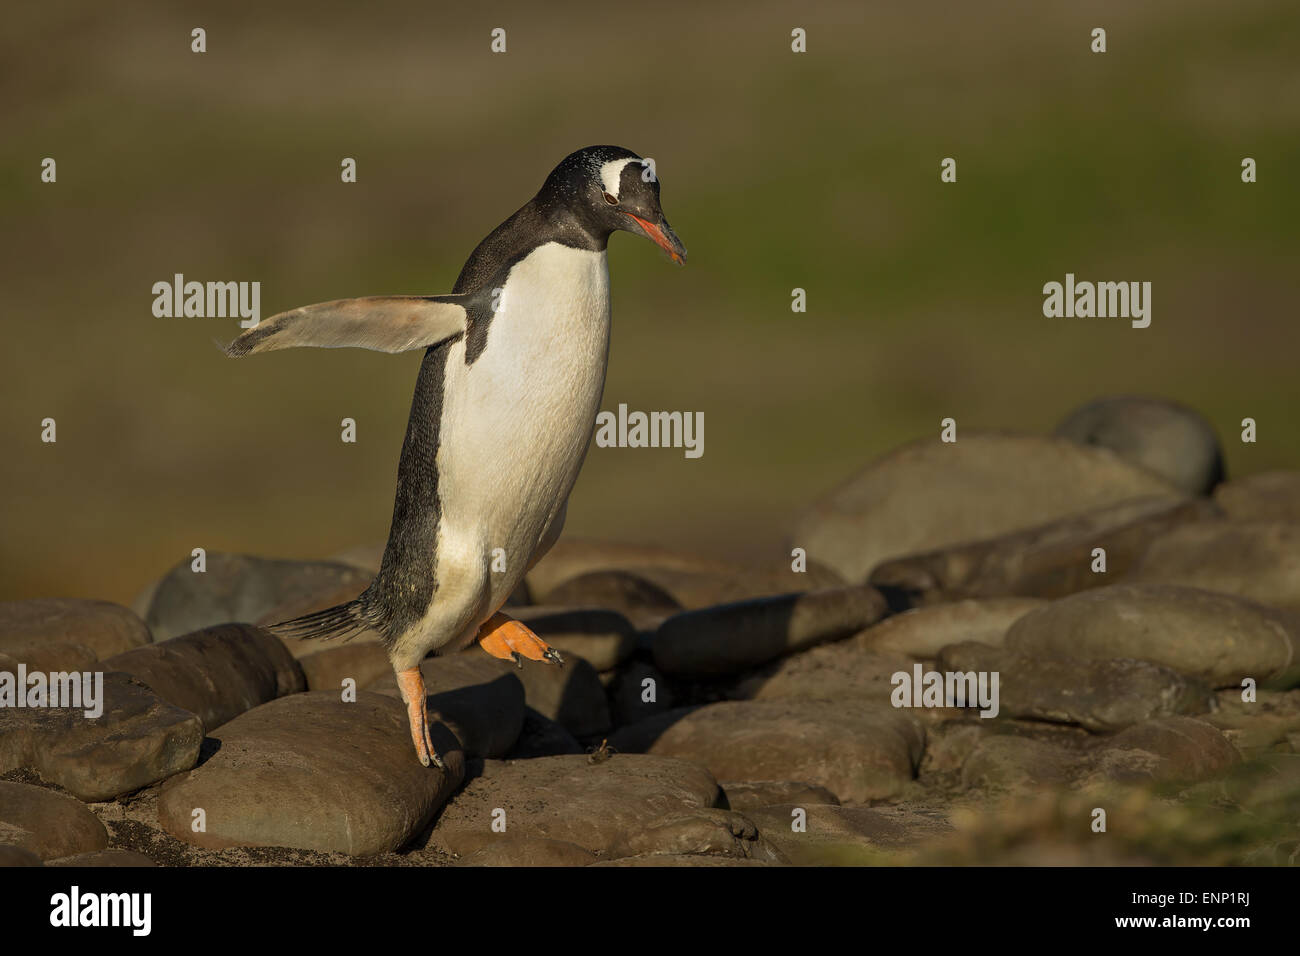 Gentoo penguin hopping from the rocks Stock Photo